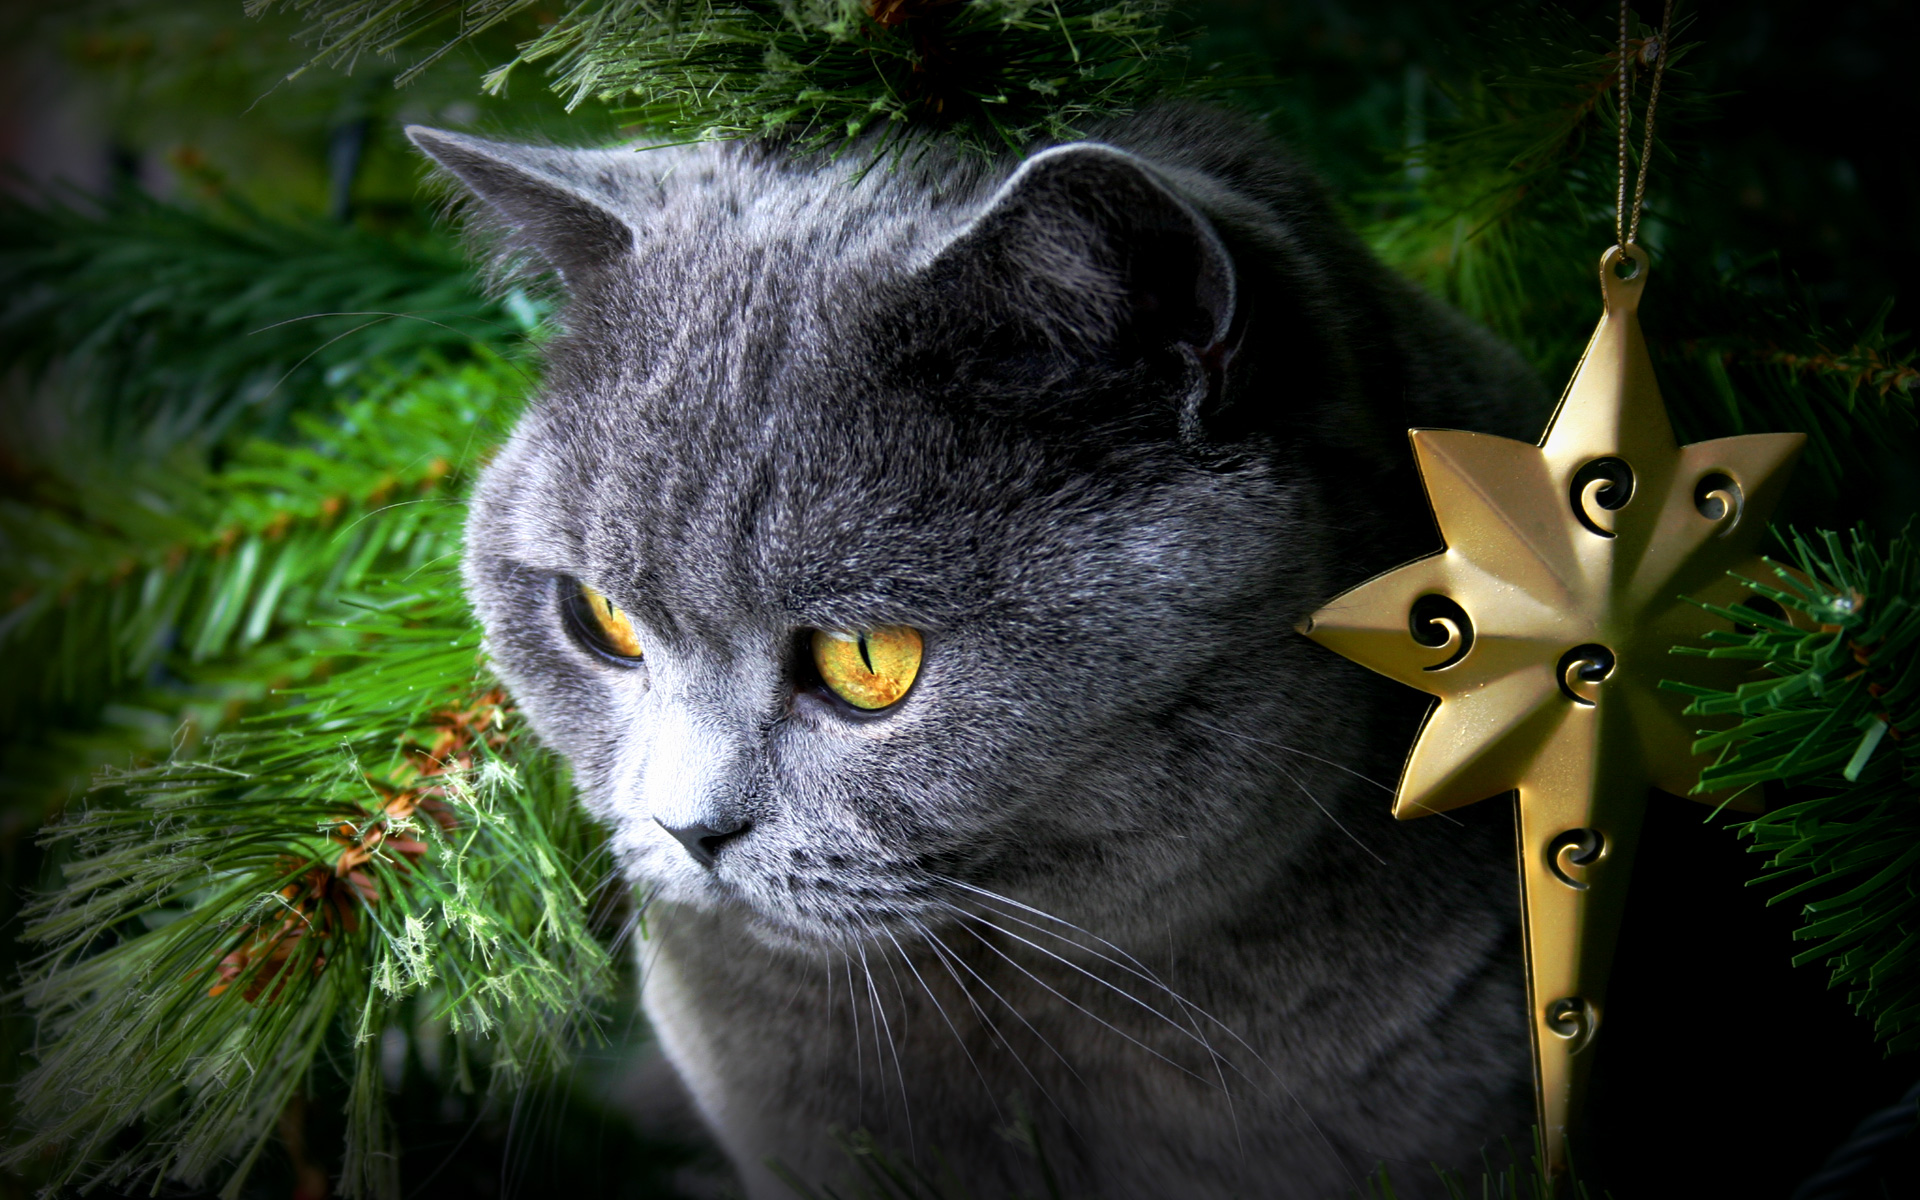 Grey cat sitting amidst Christmas tree decorations.